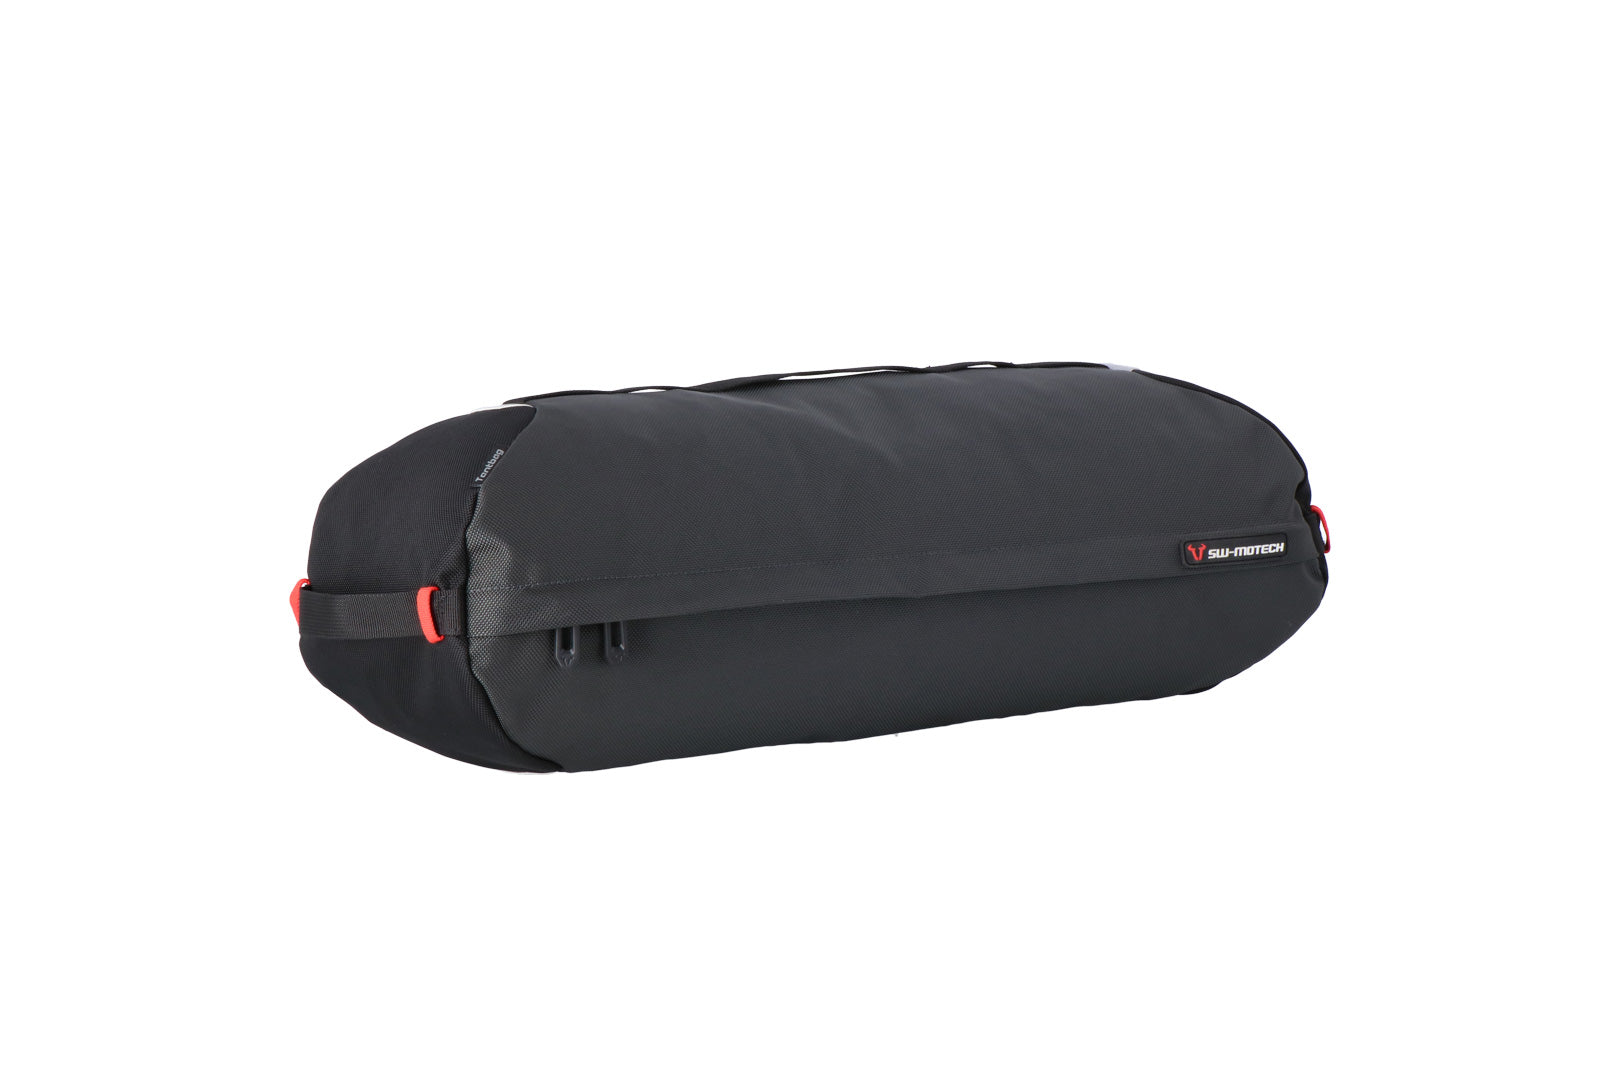 PRO Tentbag Tail Bag 1680D Ballistic Nylon 18 litre Black/Anthracite